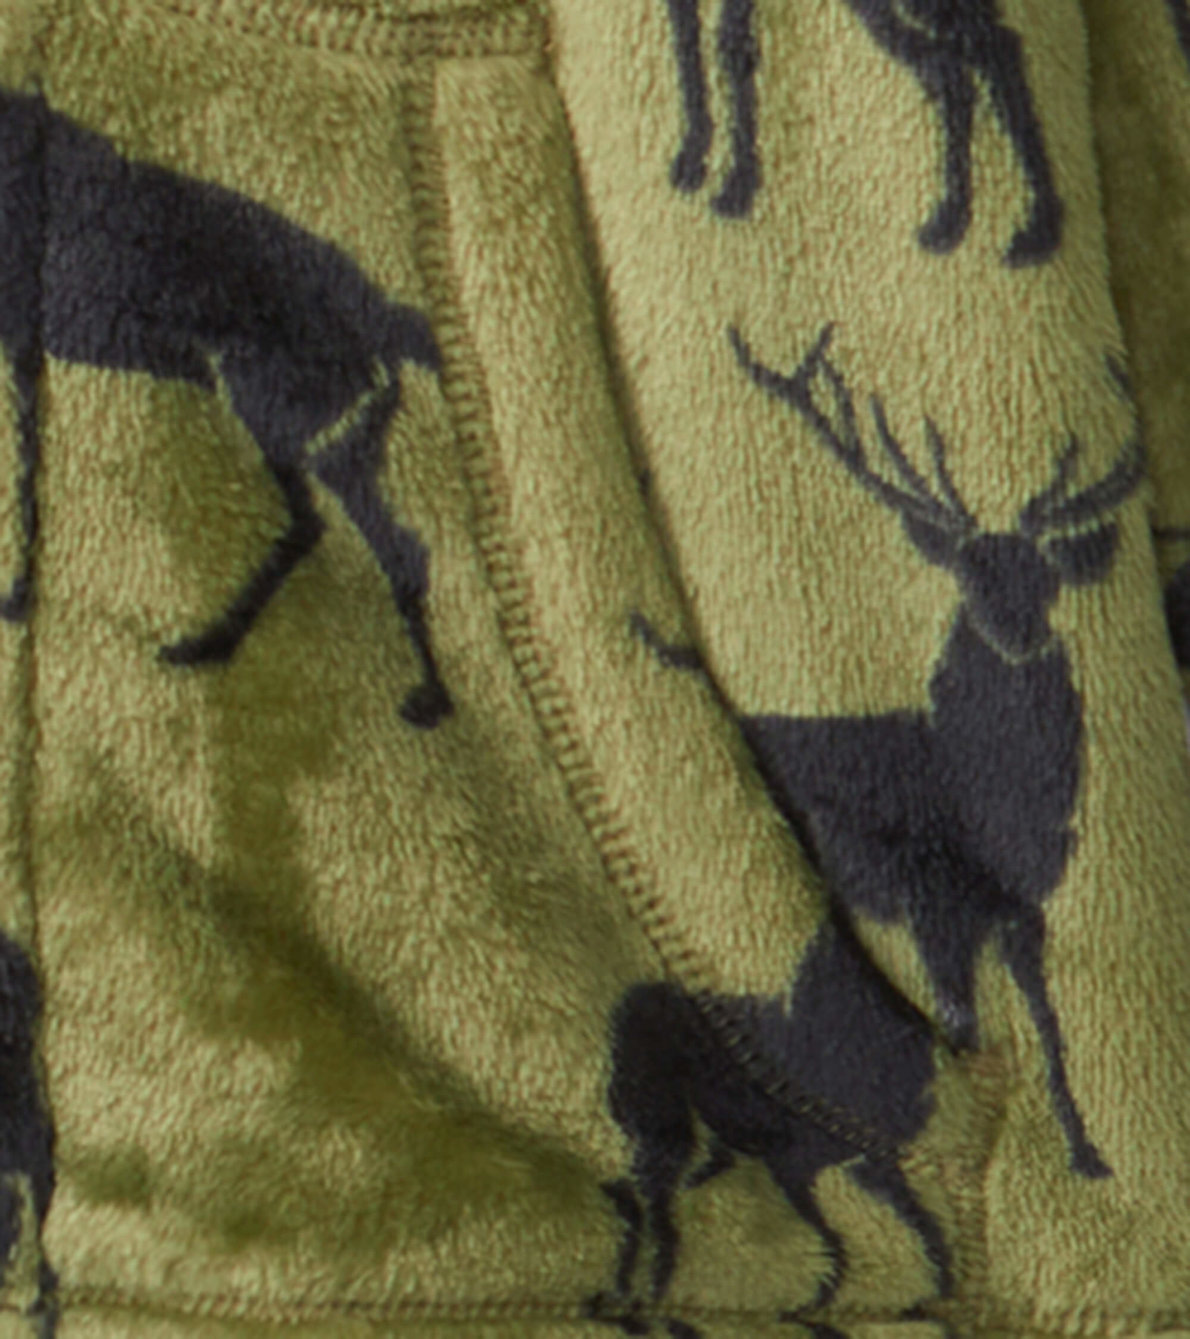 View larger image of Boys Magestic Elk Fleece Jacket